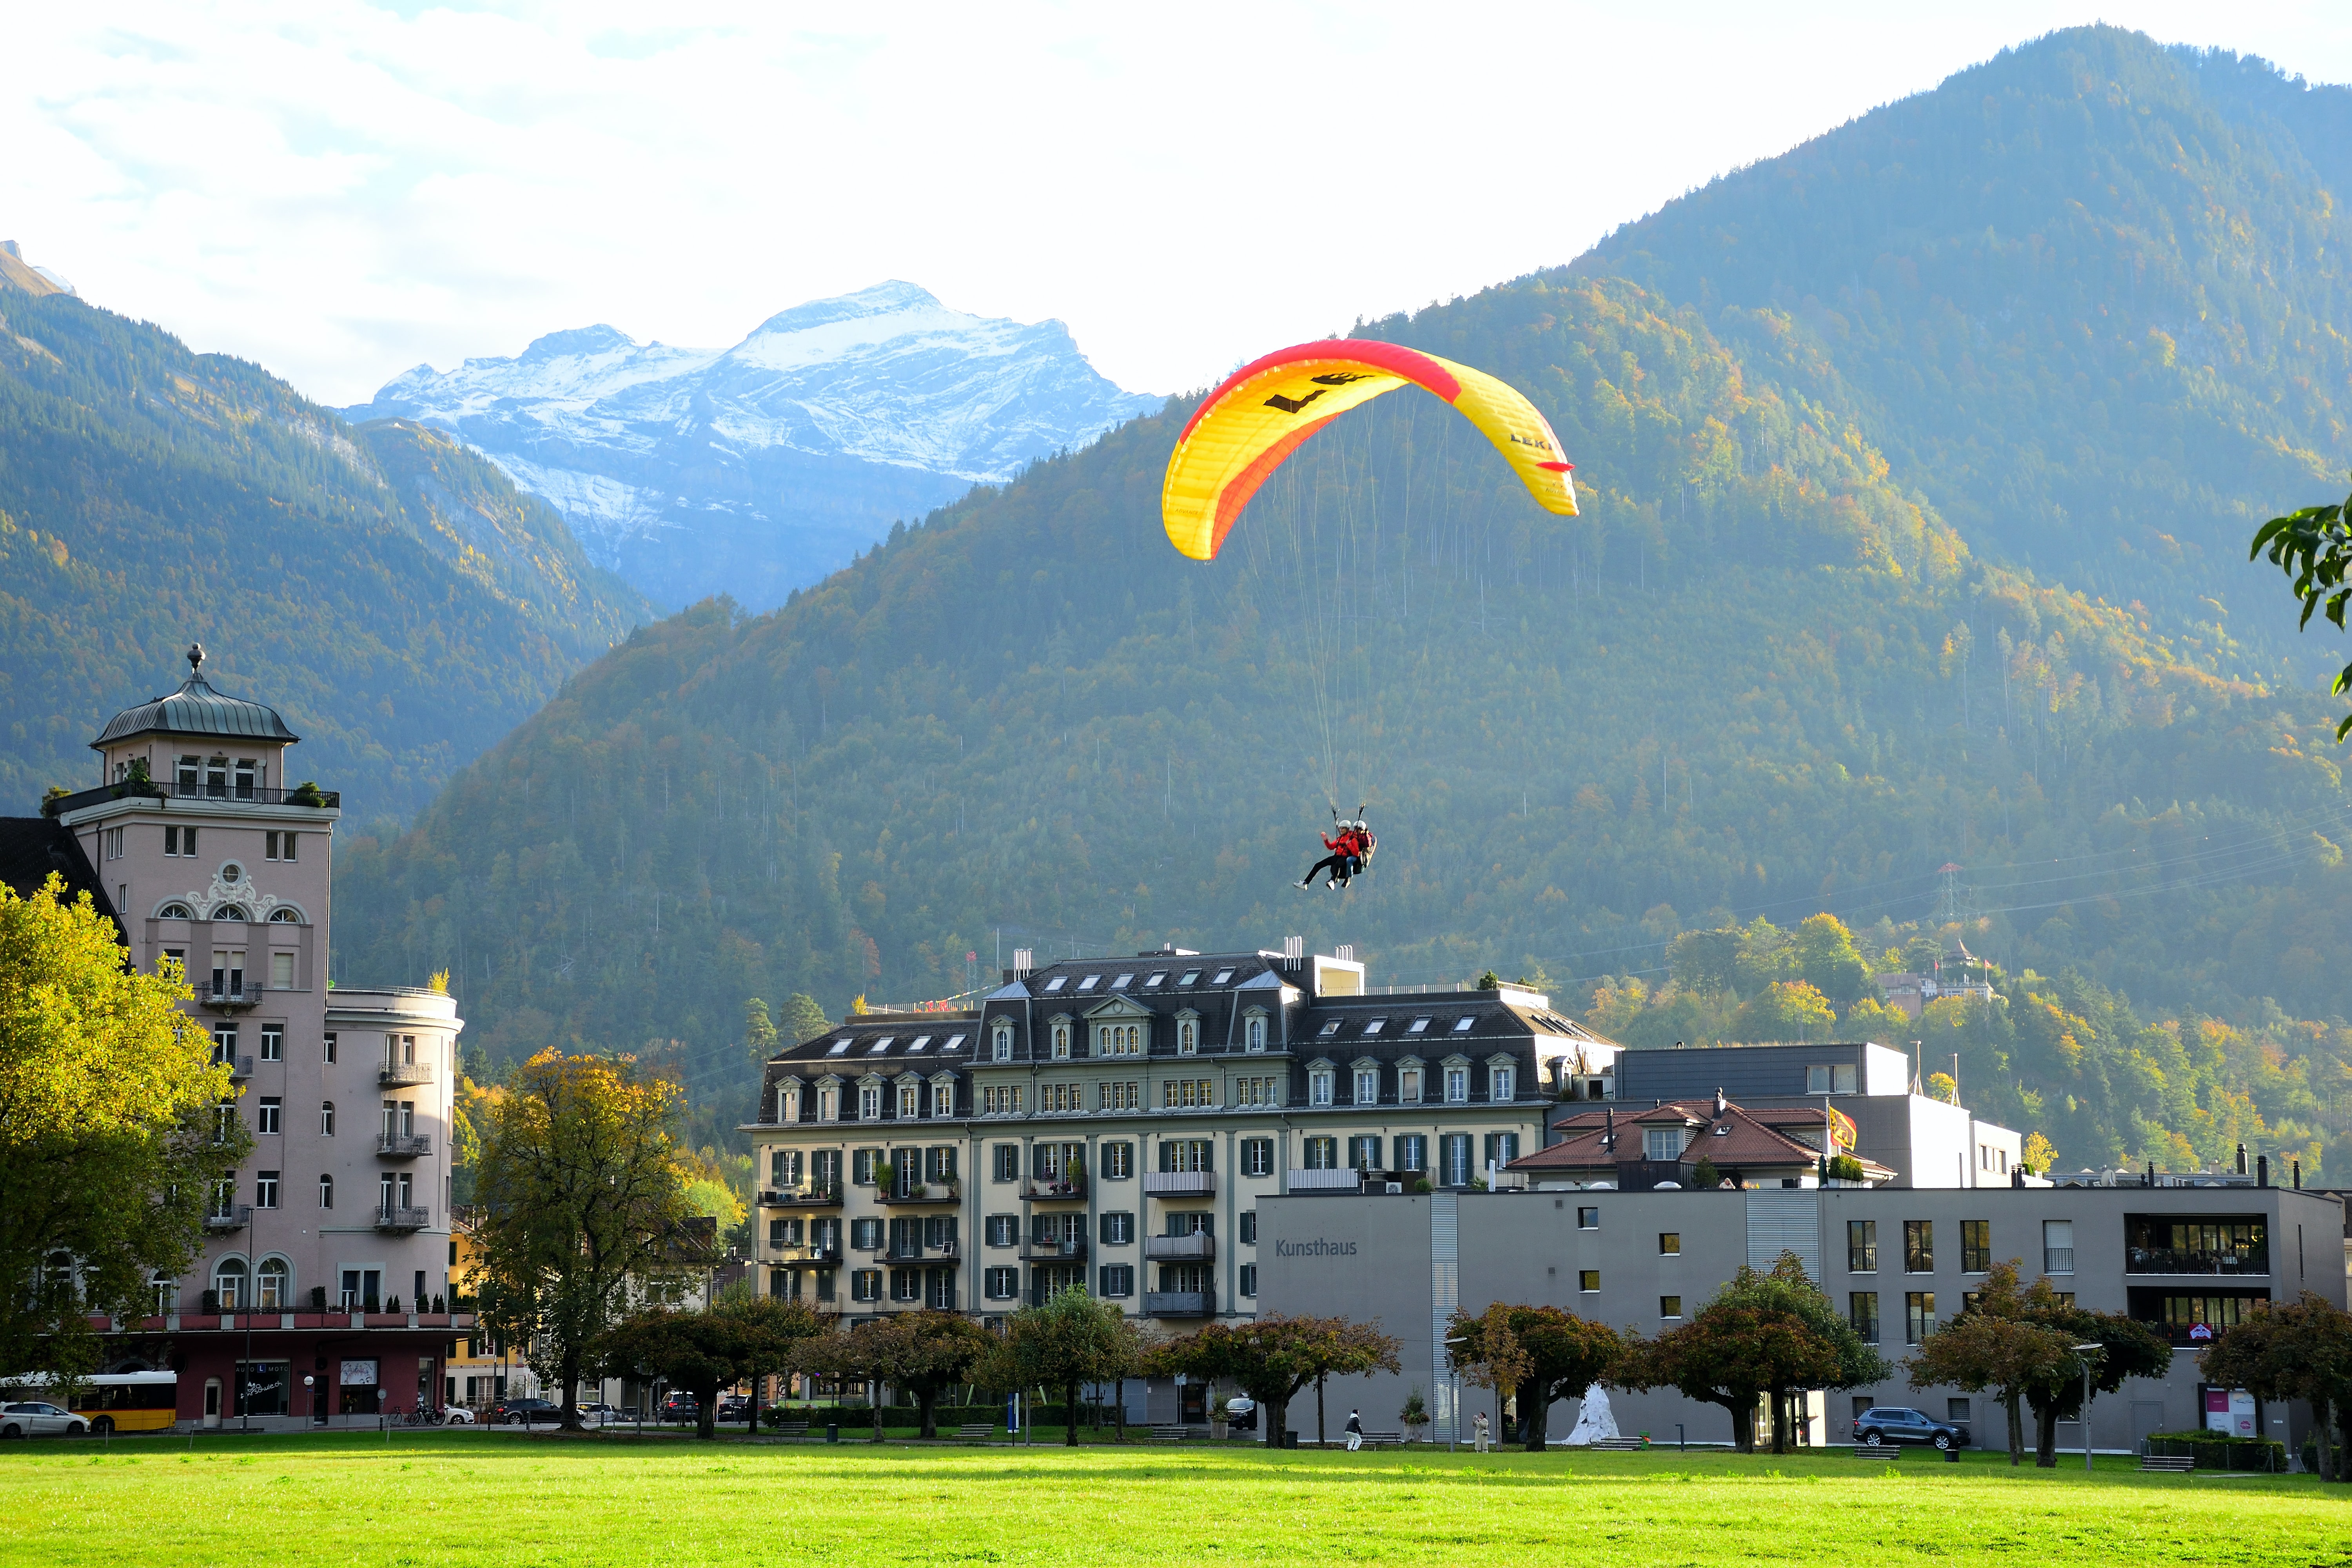 Peak rush: Paragliding the Swiss Alps